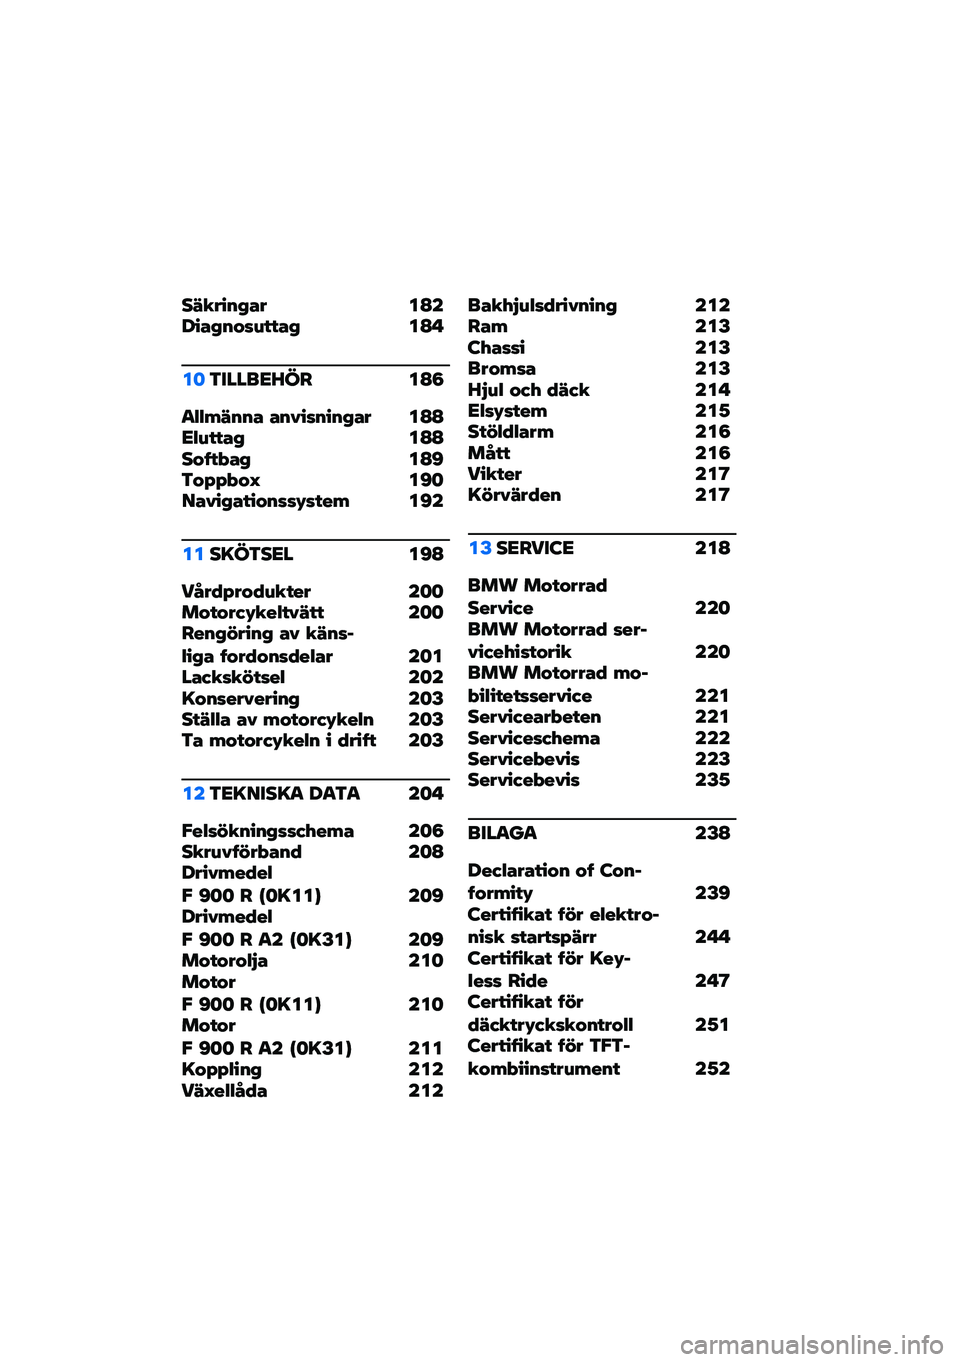 BMW MOTORRAD F 900 R 2021  Instruktionsbok (in Swedish) ��7����%�&�� ��A�����&�%�$��0����& ��A� 
��	�3�����<�M�� ��A�8
�
�.�.�+�7�%�%� ��%����%��%�&�� ��A�A�<�.�0����& ��A�A��$�6��-��& ��A�C�3�$�;�;�-�$�L ��C�	��